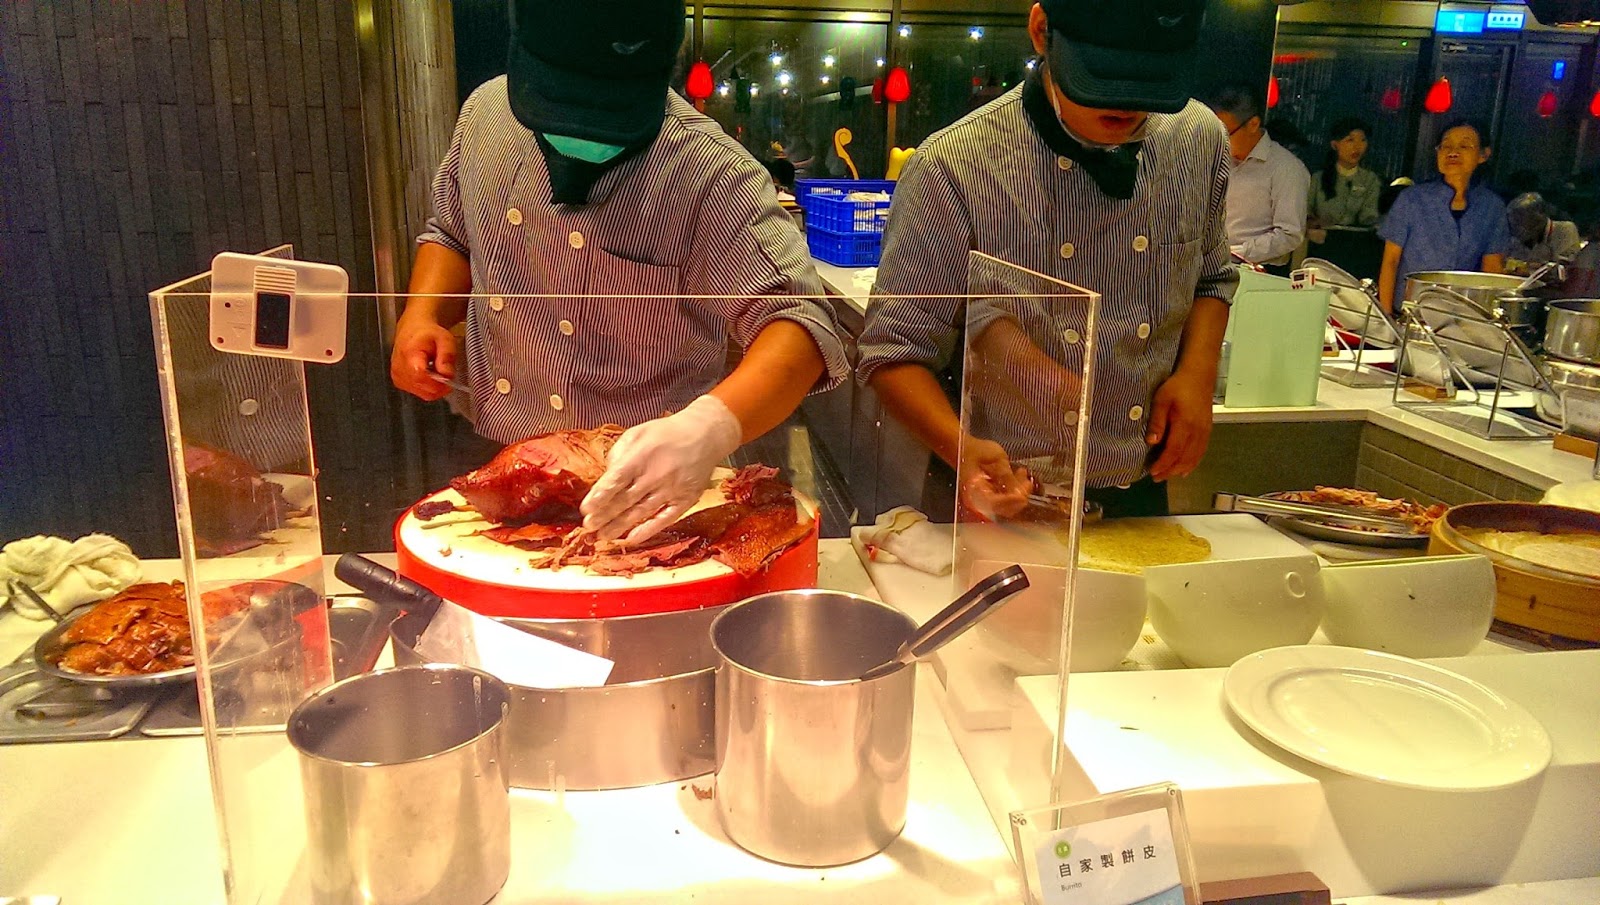 2015 07 01%2B19.11.32 - [食記] 台北京站 - 饗食天堂，有生魚片吃到飽的高級自助餐廳！